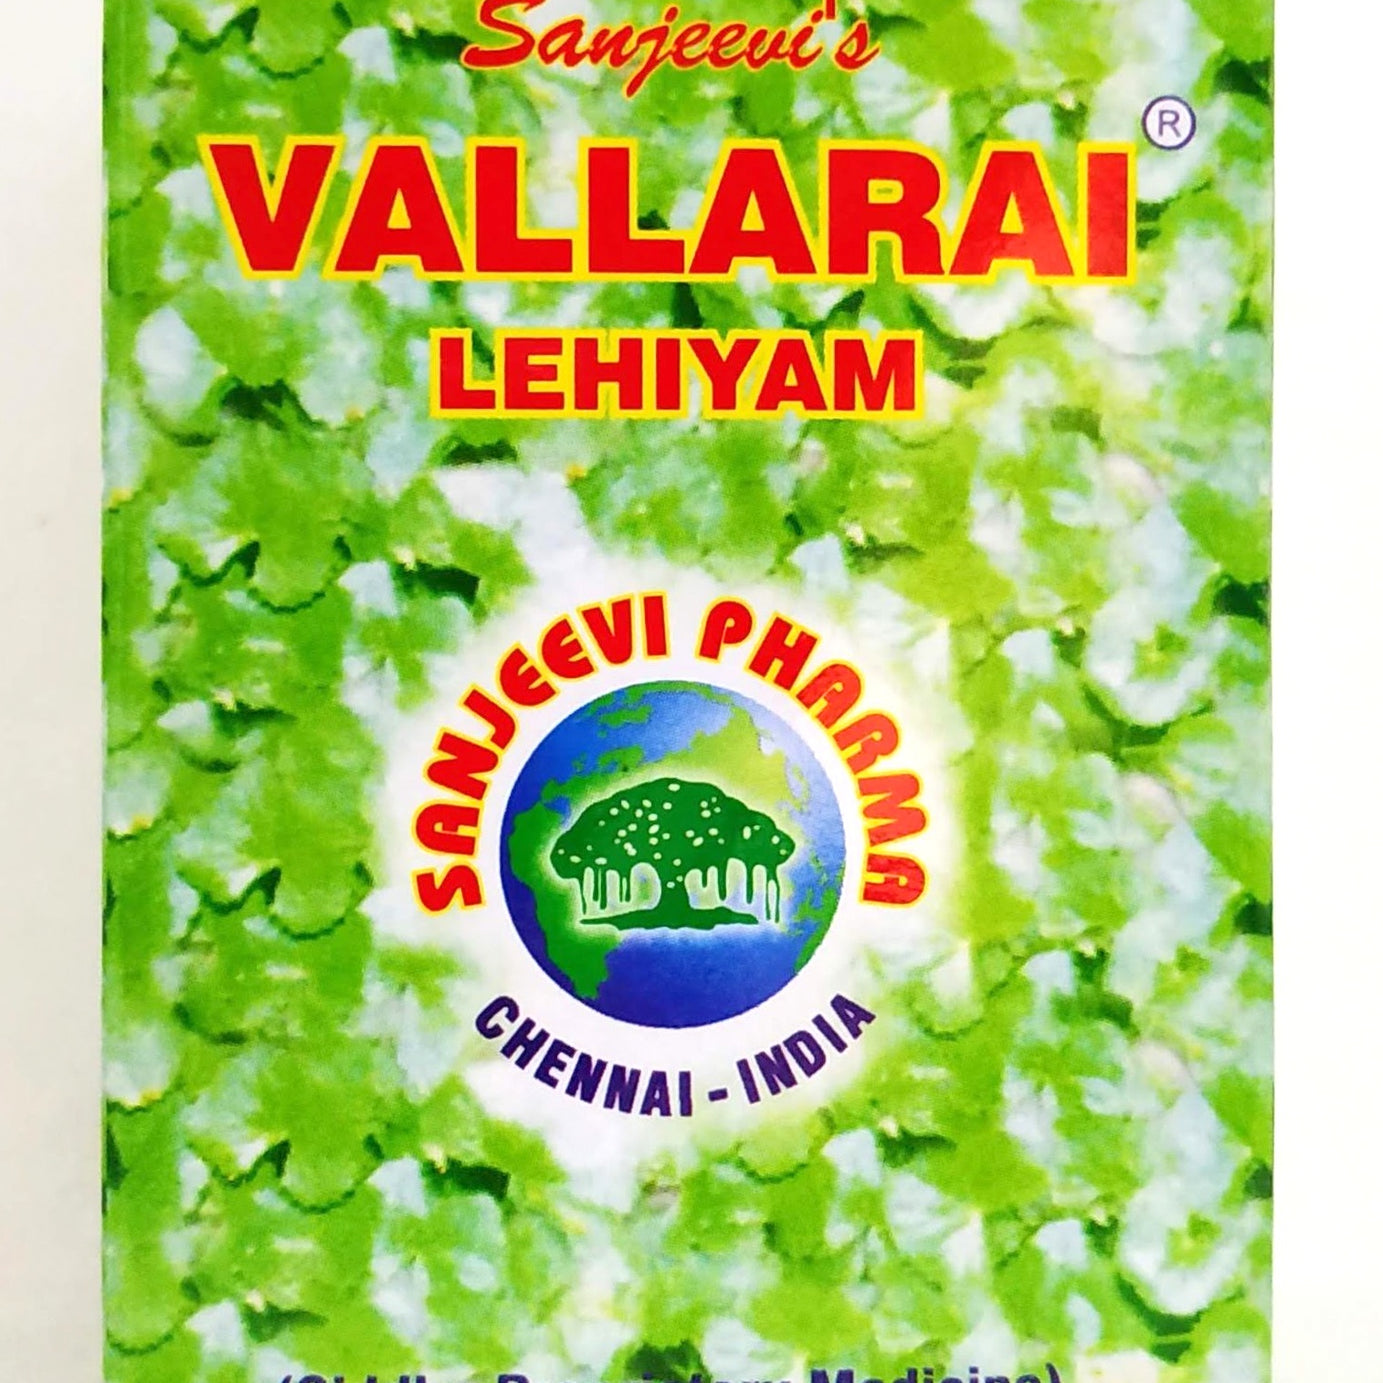 Shop Vallarai Lehyam 250gm at price 195.00 from Sanjeevi Online - Ayush Care